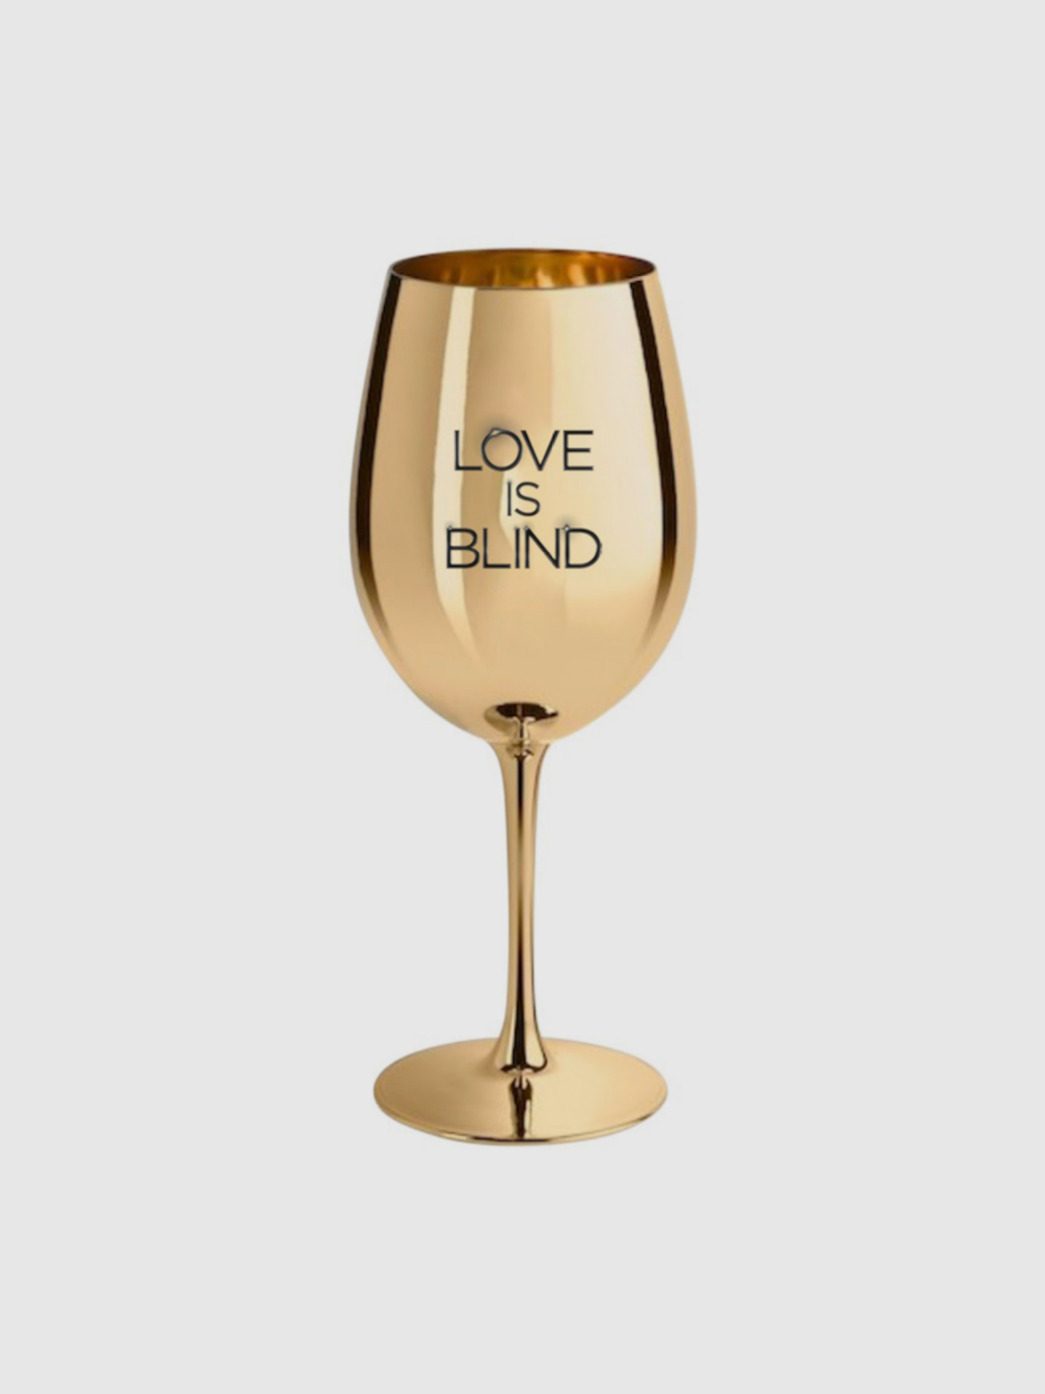 Where To Buy Love Is Blind Gold Wine Glass Goblets Netflix Tudum